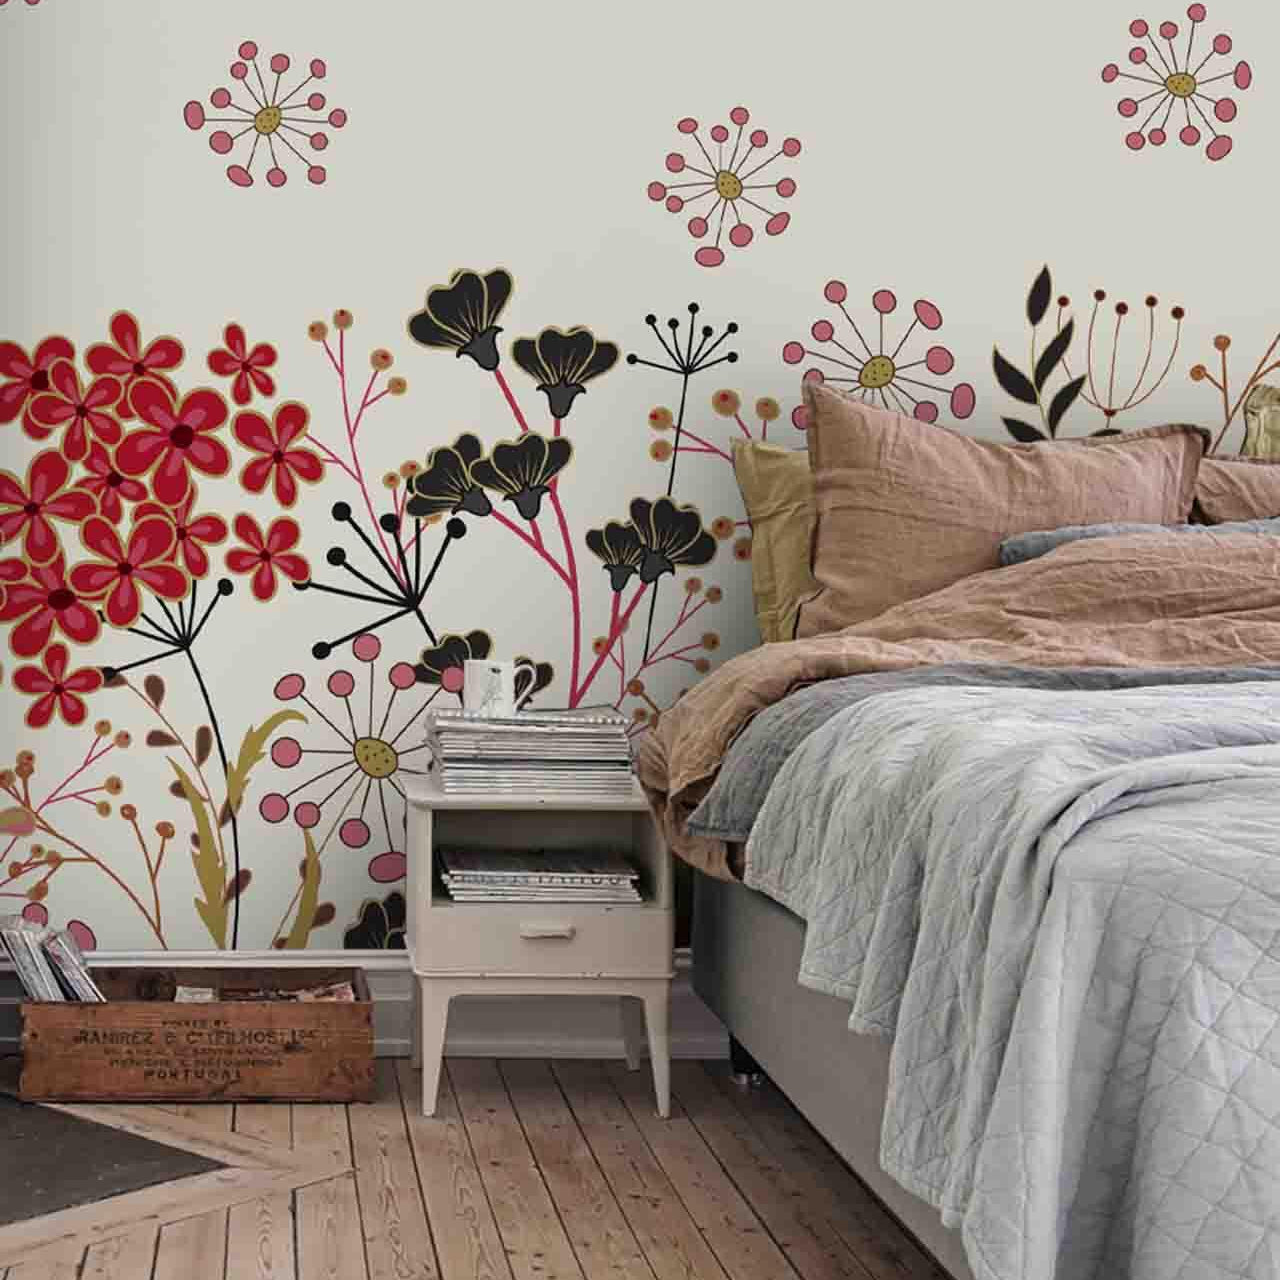 3D Floral Dandelion Wall Mural Wallpaper 70- Jess Art Decoration